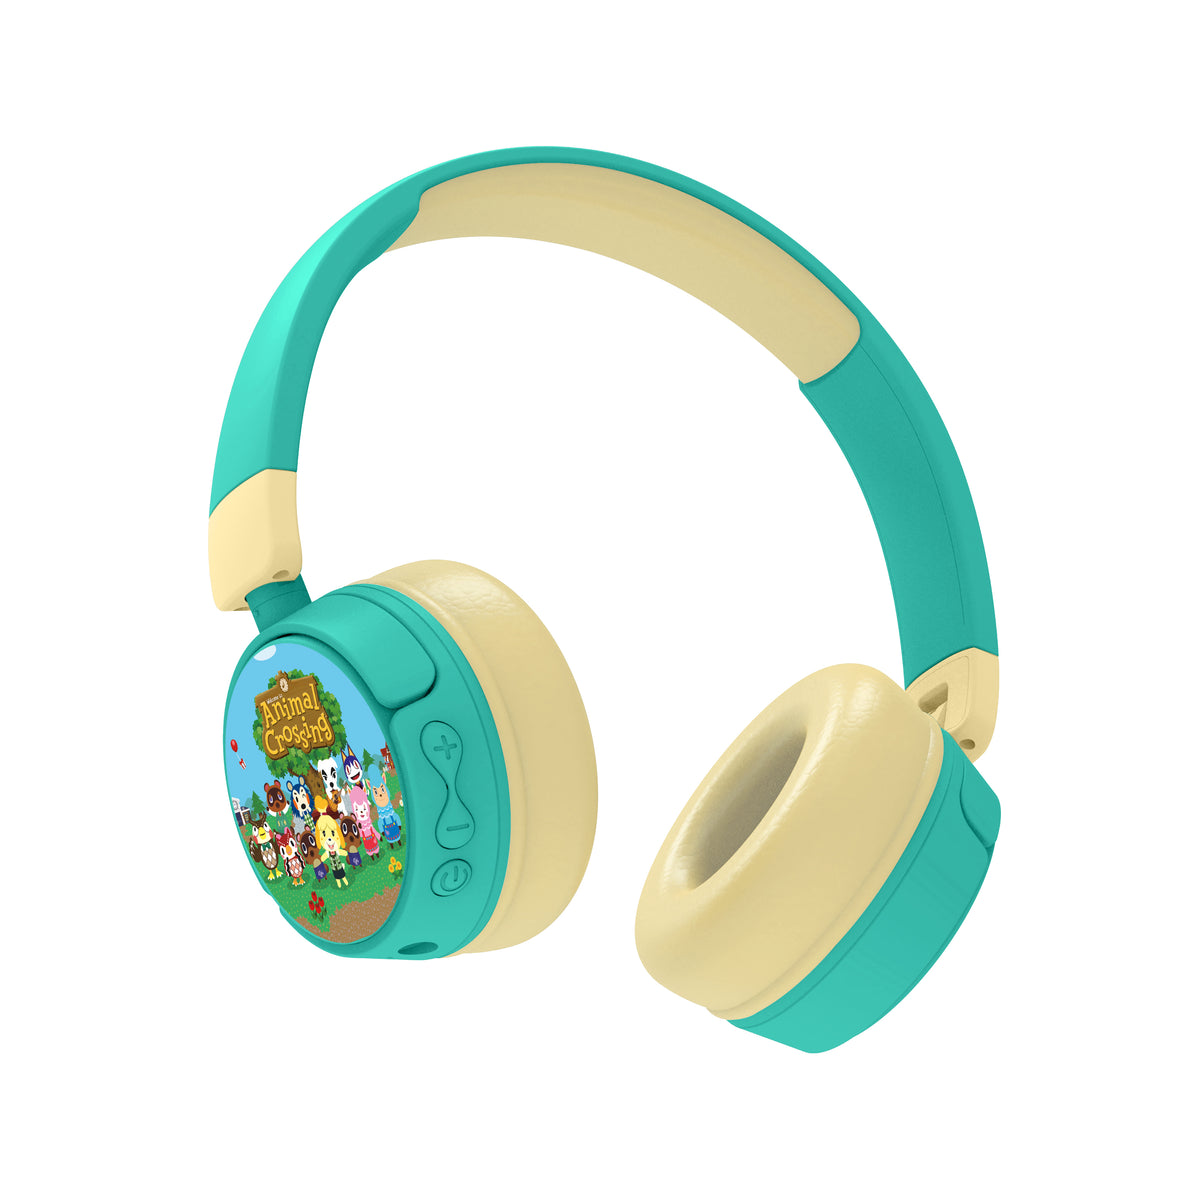 OTL Nintendo Animal Crossing Kids Over-Ear Wireless Headphone | AC0998 from OTL - DID Electrical